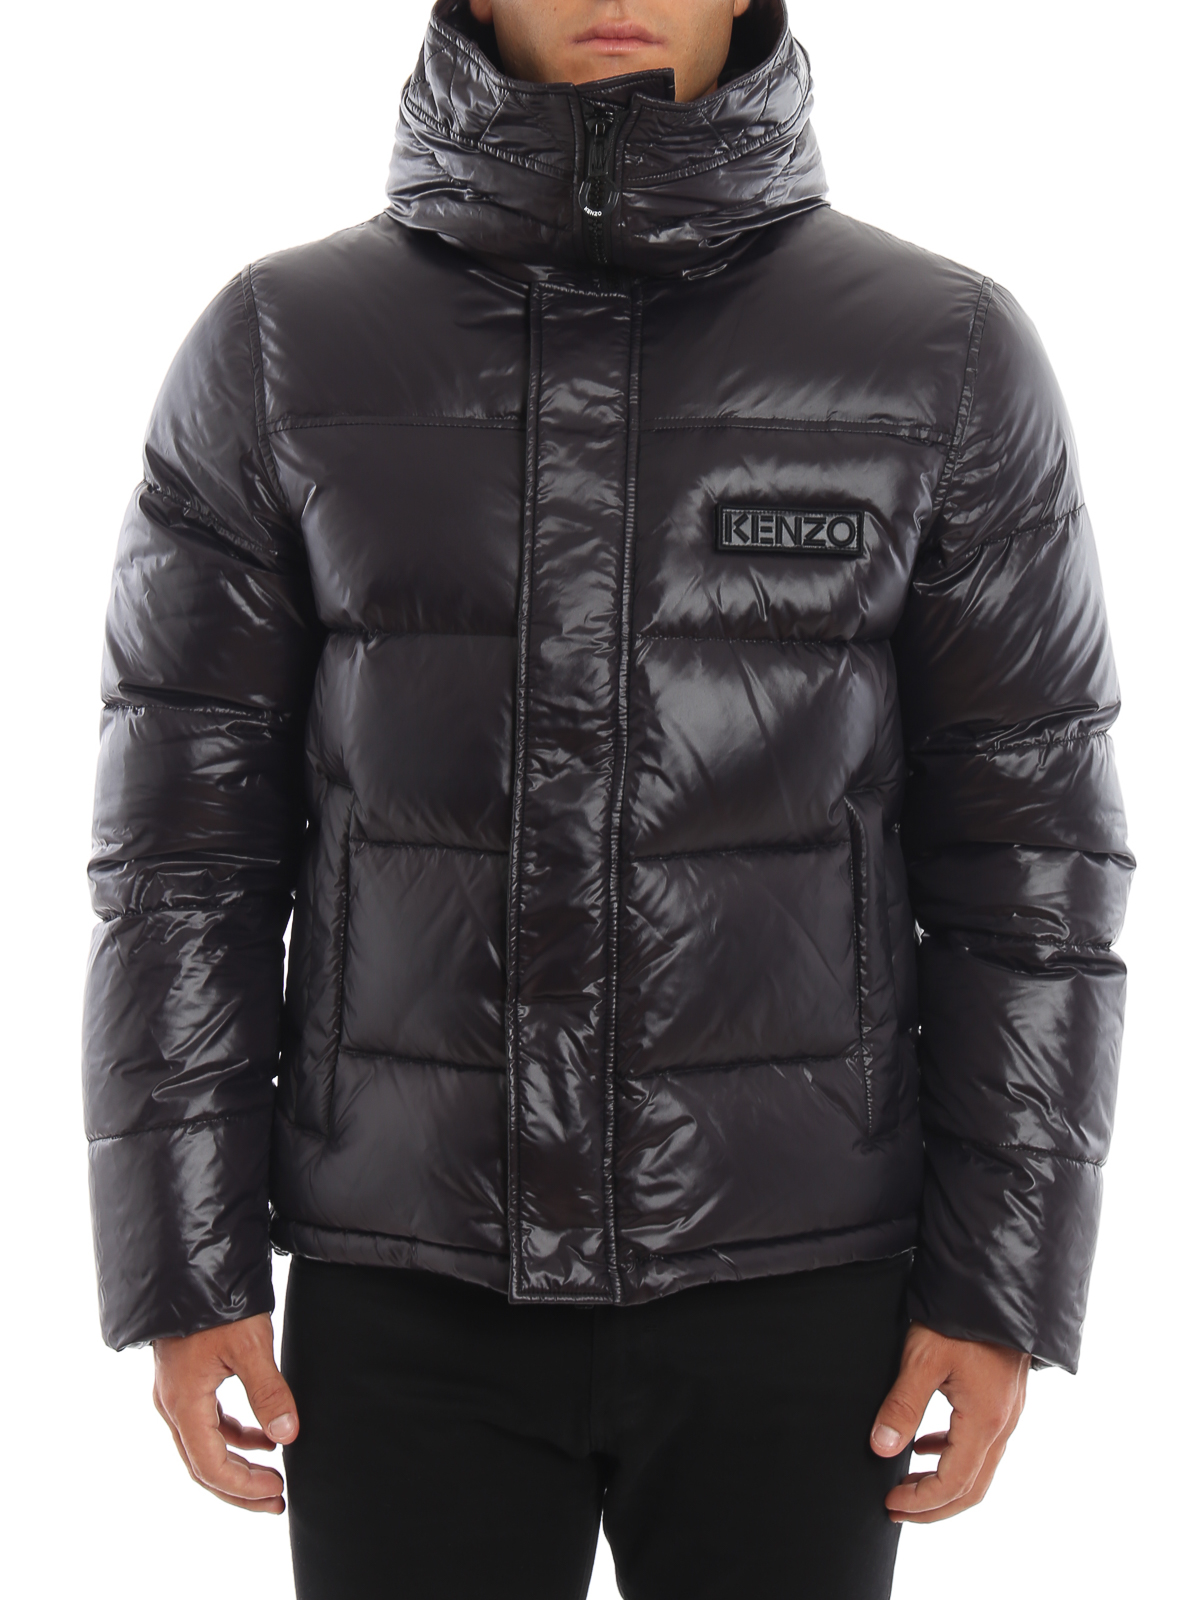 Kenzo - Black hooded puffer jacket 